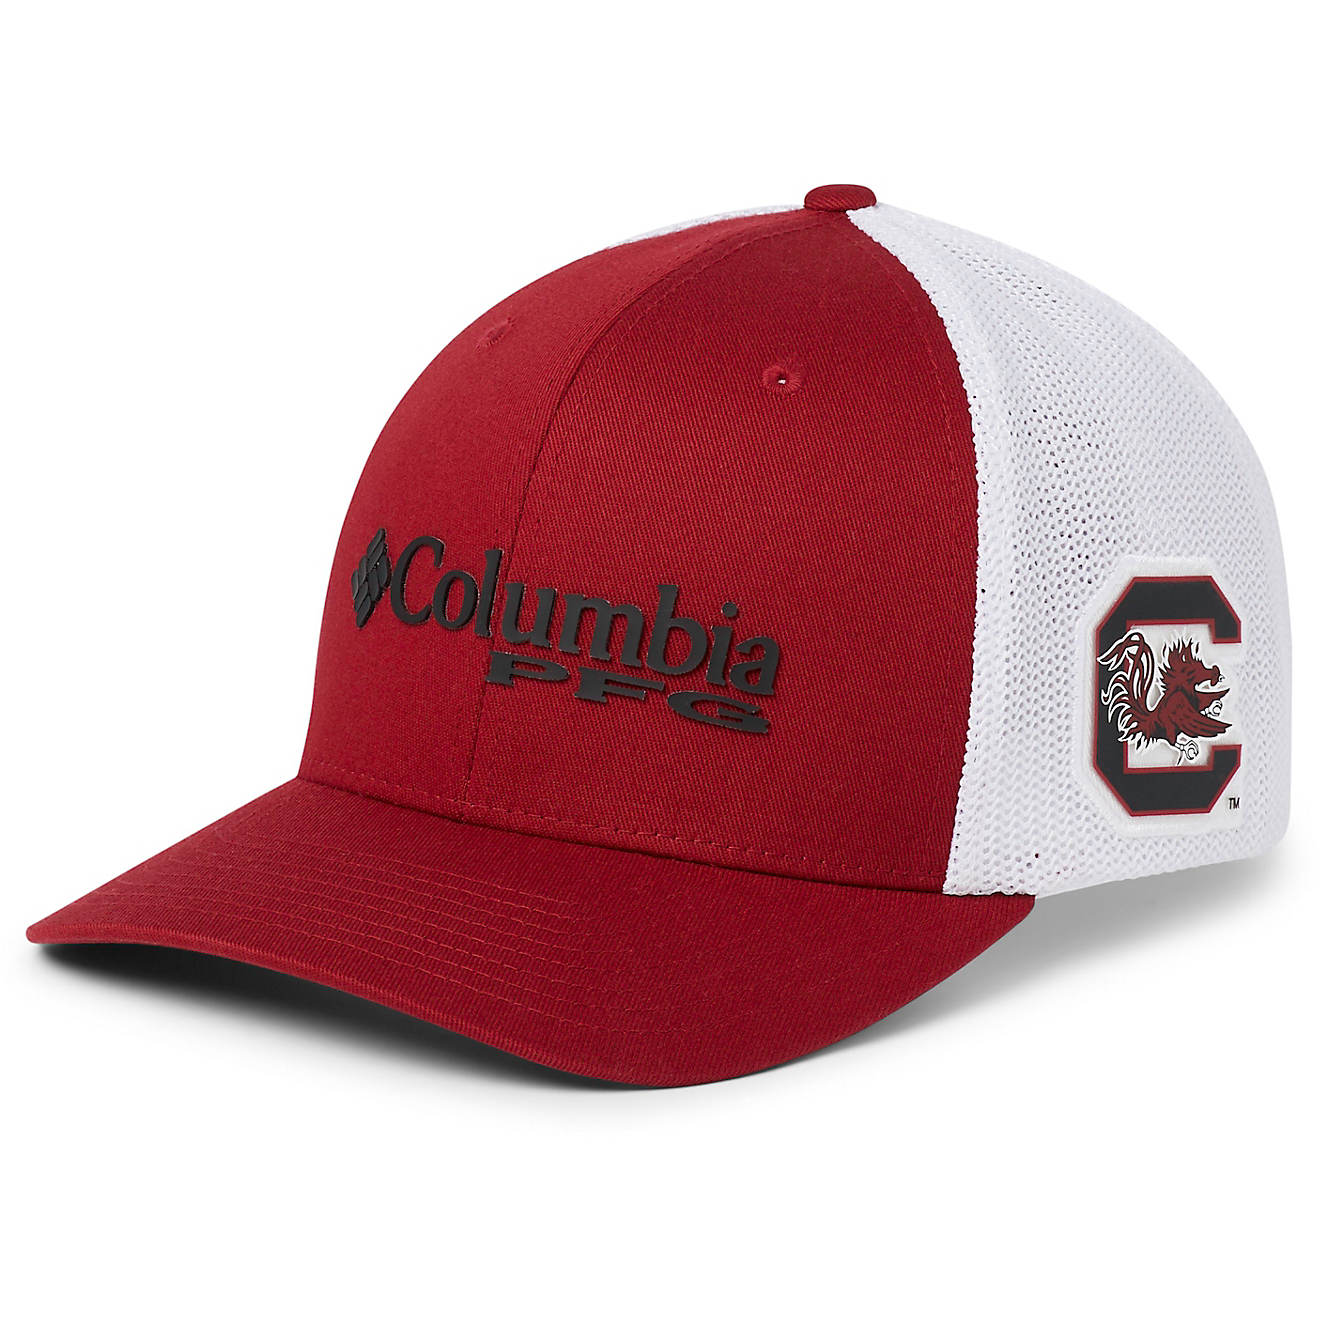 Columbia Sportswear Men's University of South Carolina Collegiate PFG Mesh  Ball Cap